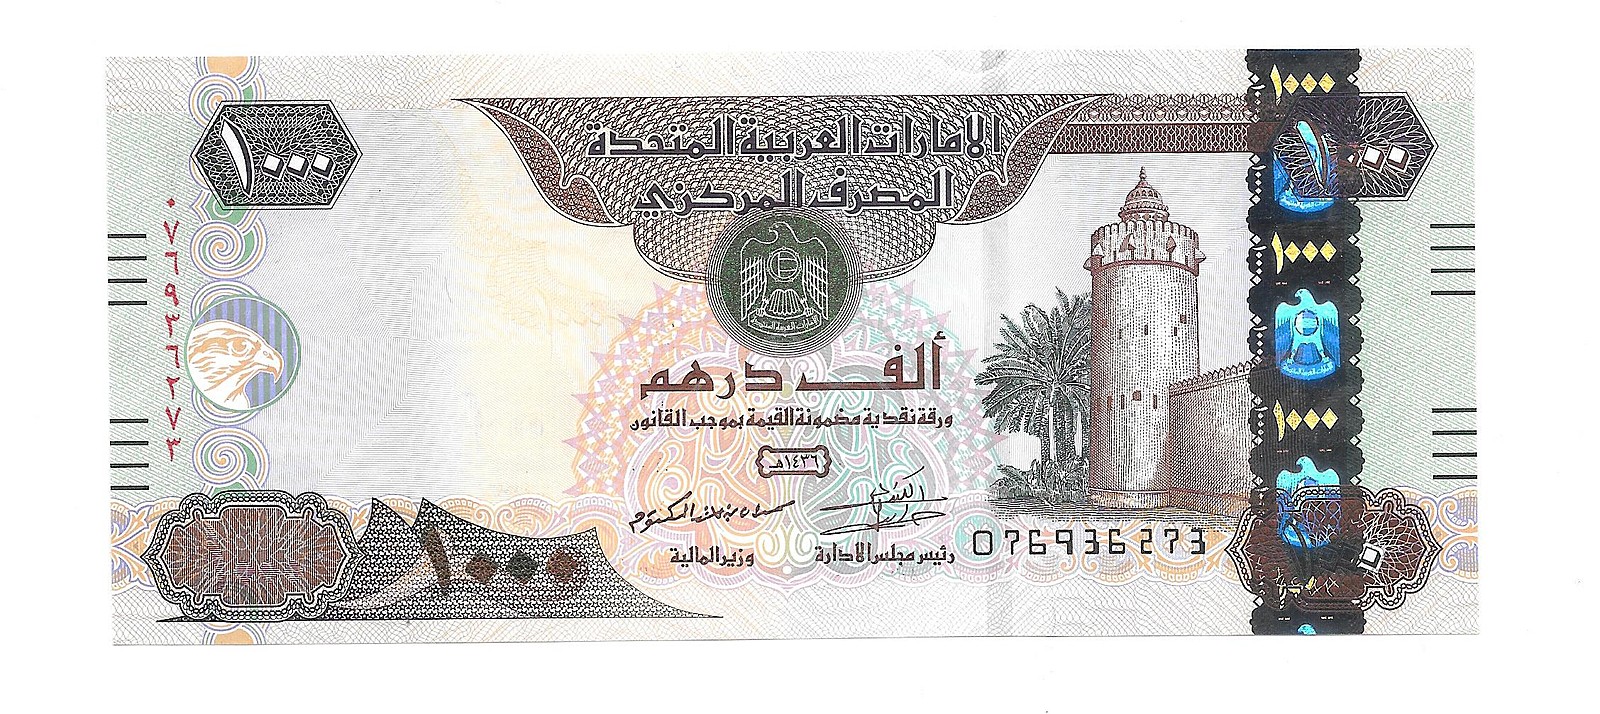 12000 дирхам. Купюры дирхамы ОАЭ. 1000 Дирхам ОАЭ банкноты. Банкноты United arab Emirates,2008, 50 dirhams. Валюта ОАЭ купюры 1000.